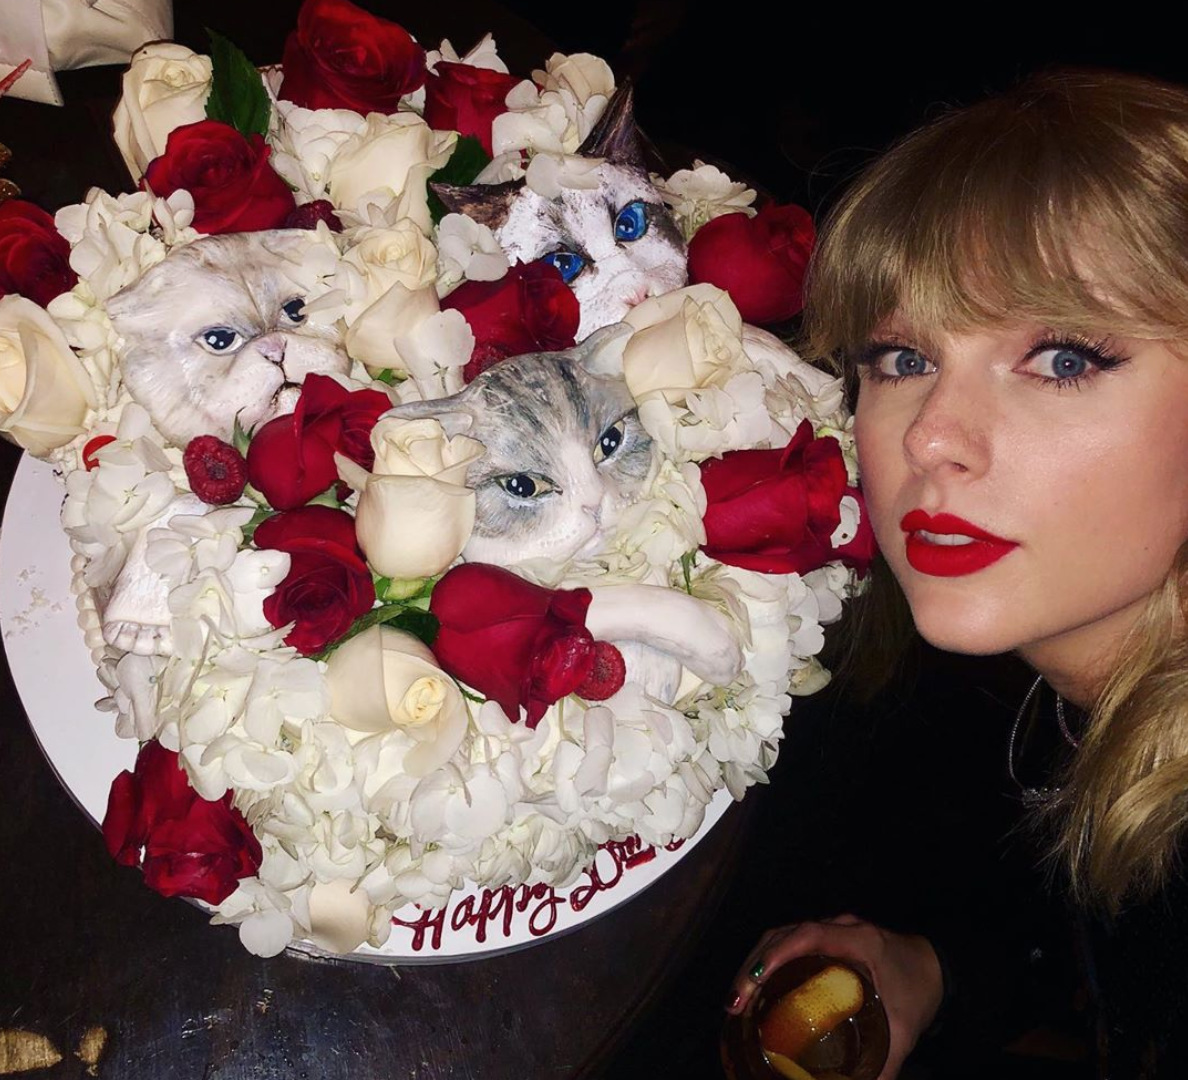 Taylor Swift cake